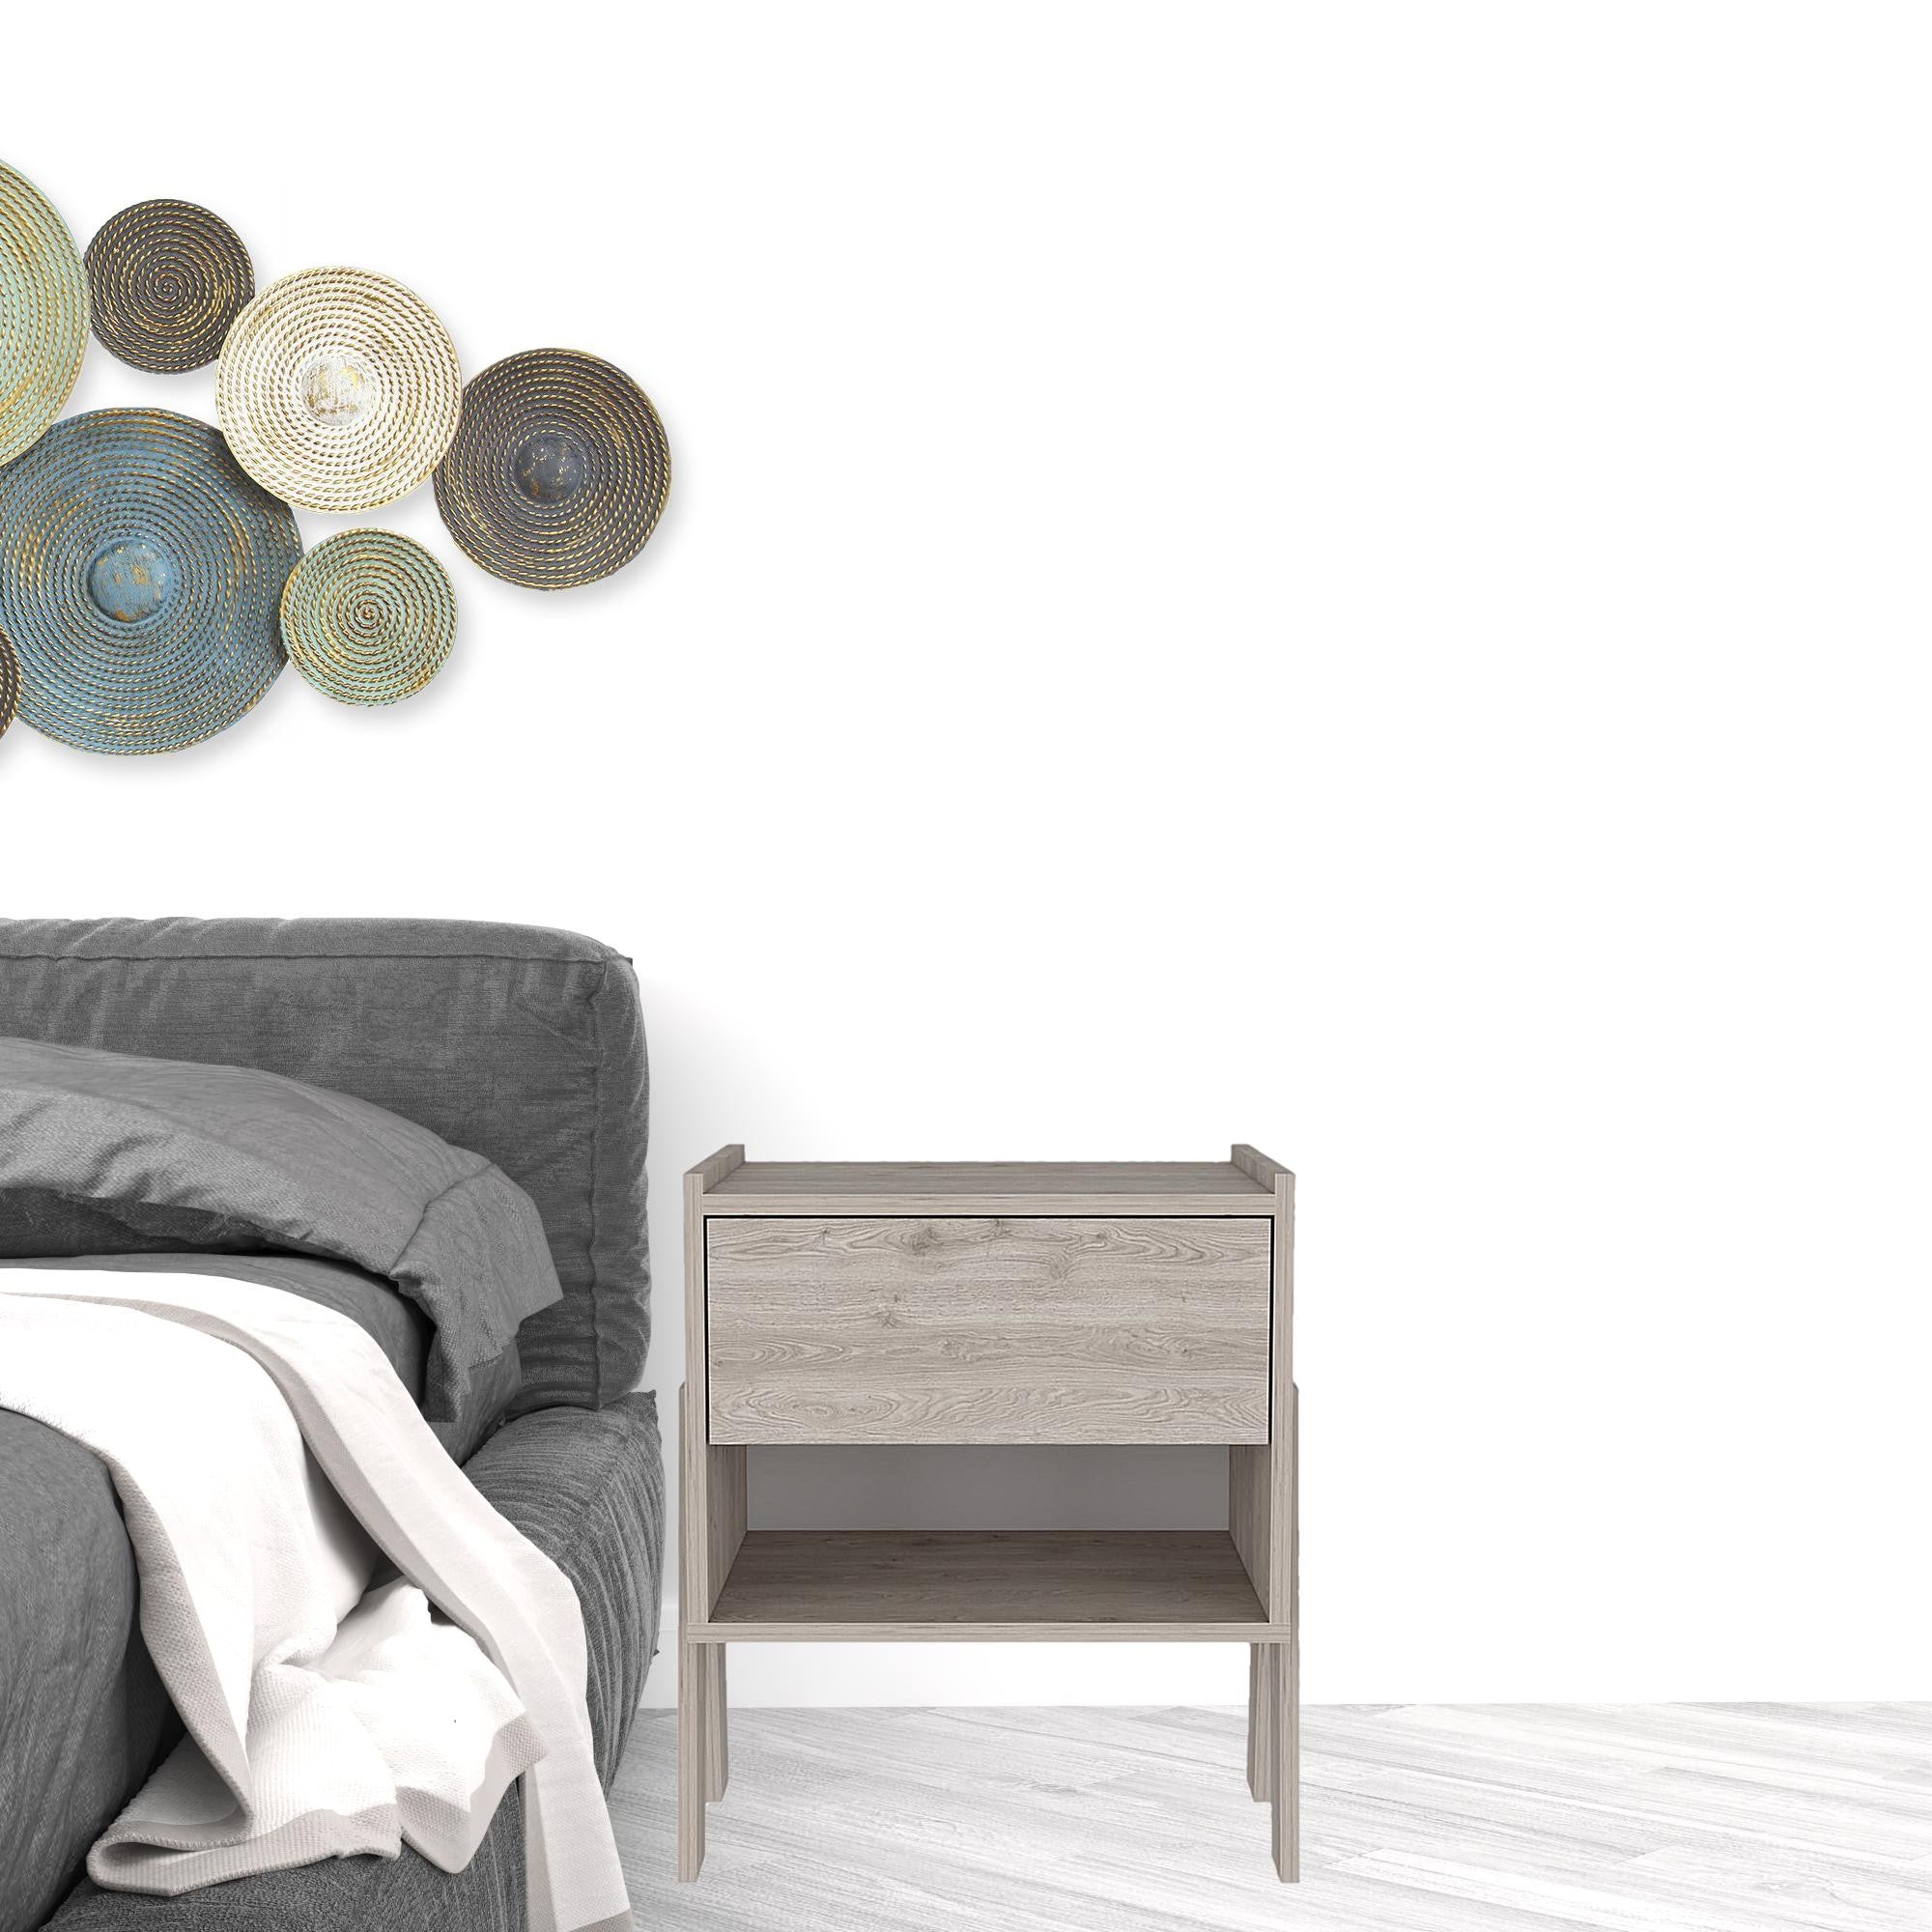 Sleek and Trendy Light Grey Bedroom Nightstand